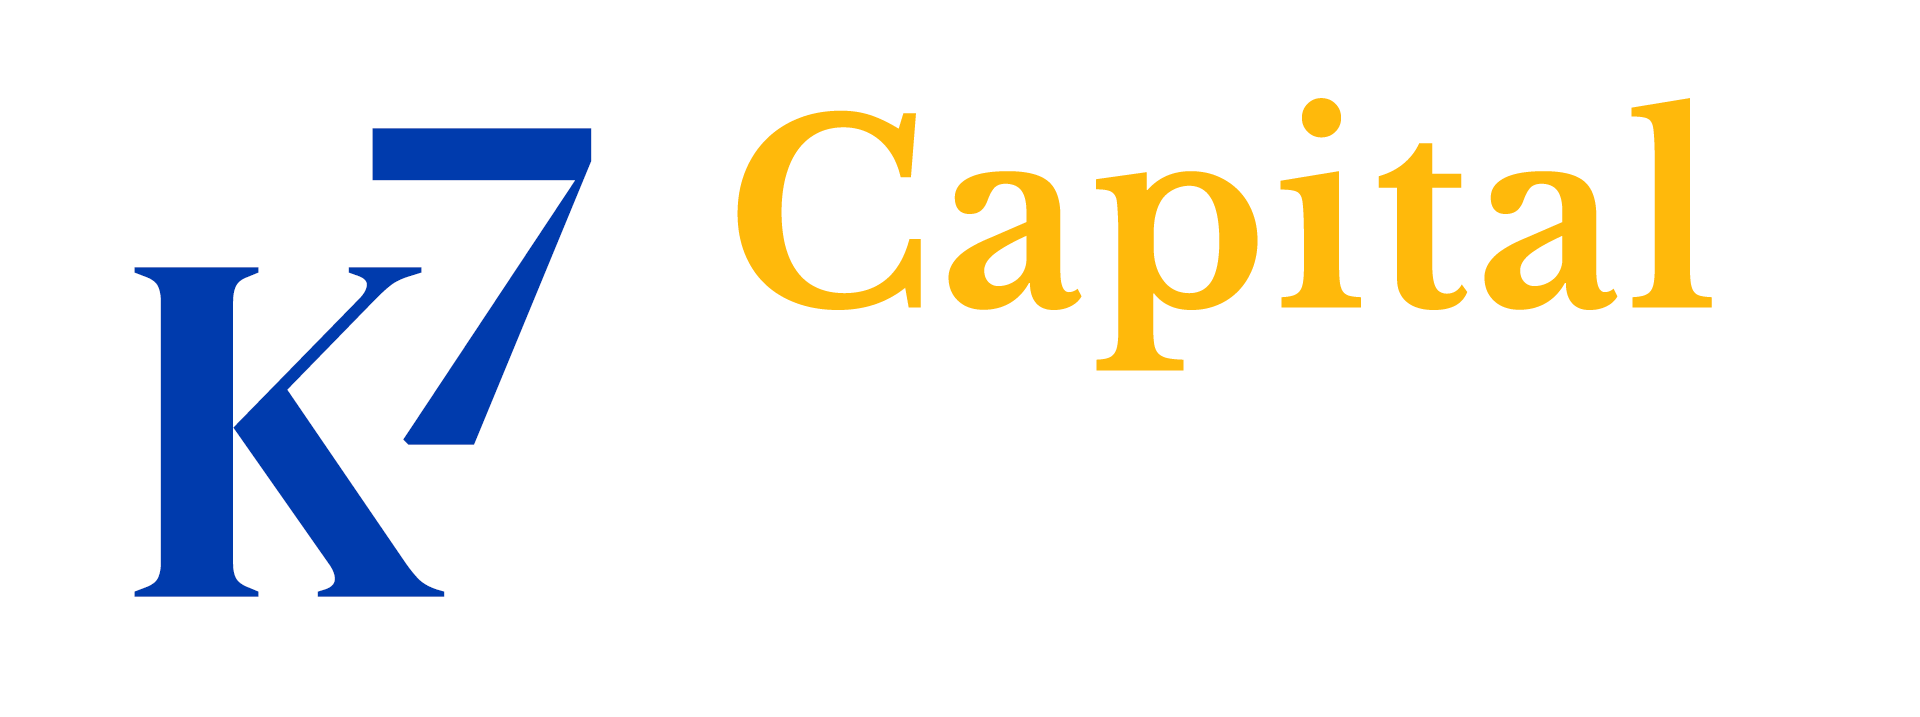 K7 Capital Partners